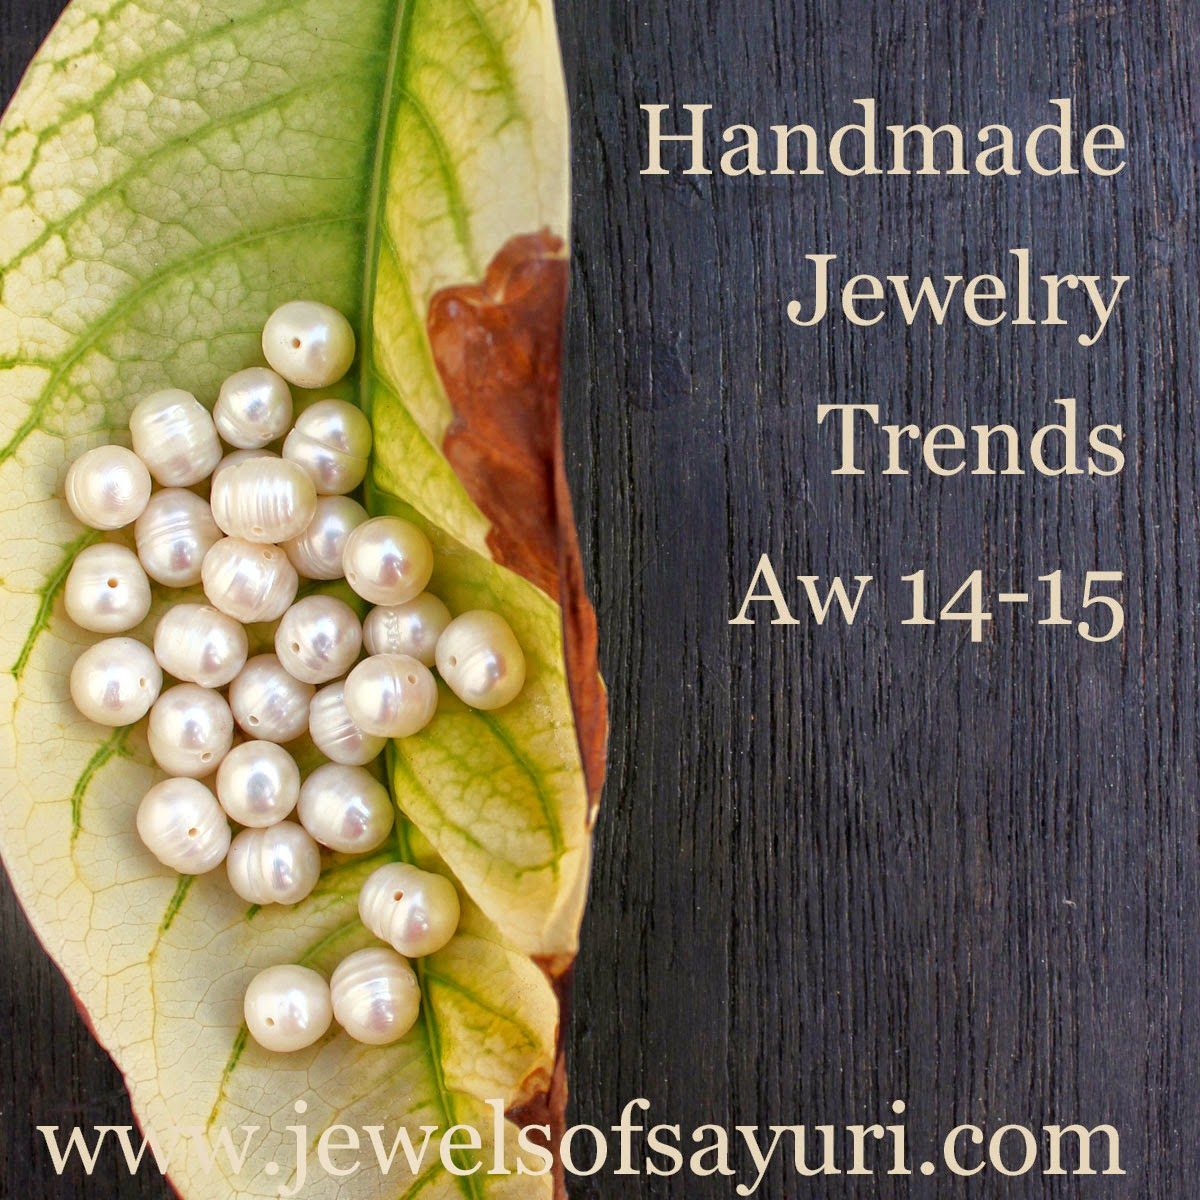 Handmade jewelry trends